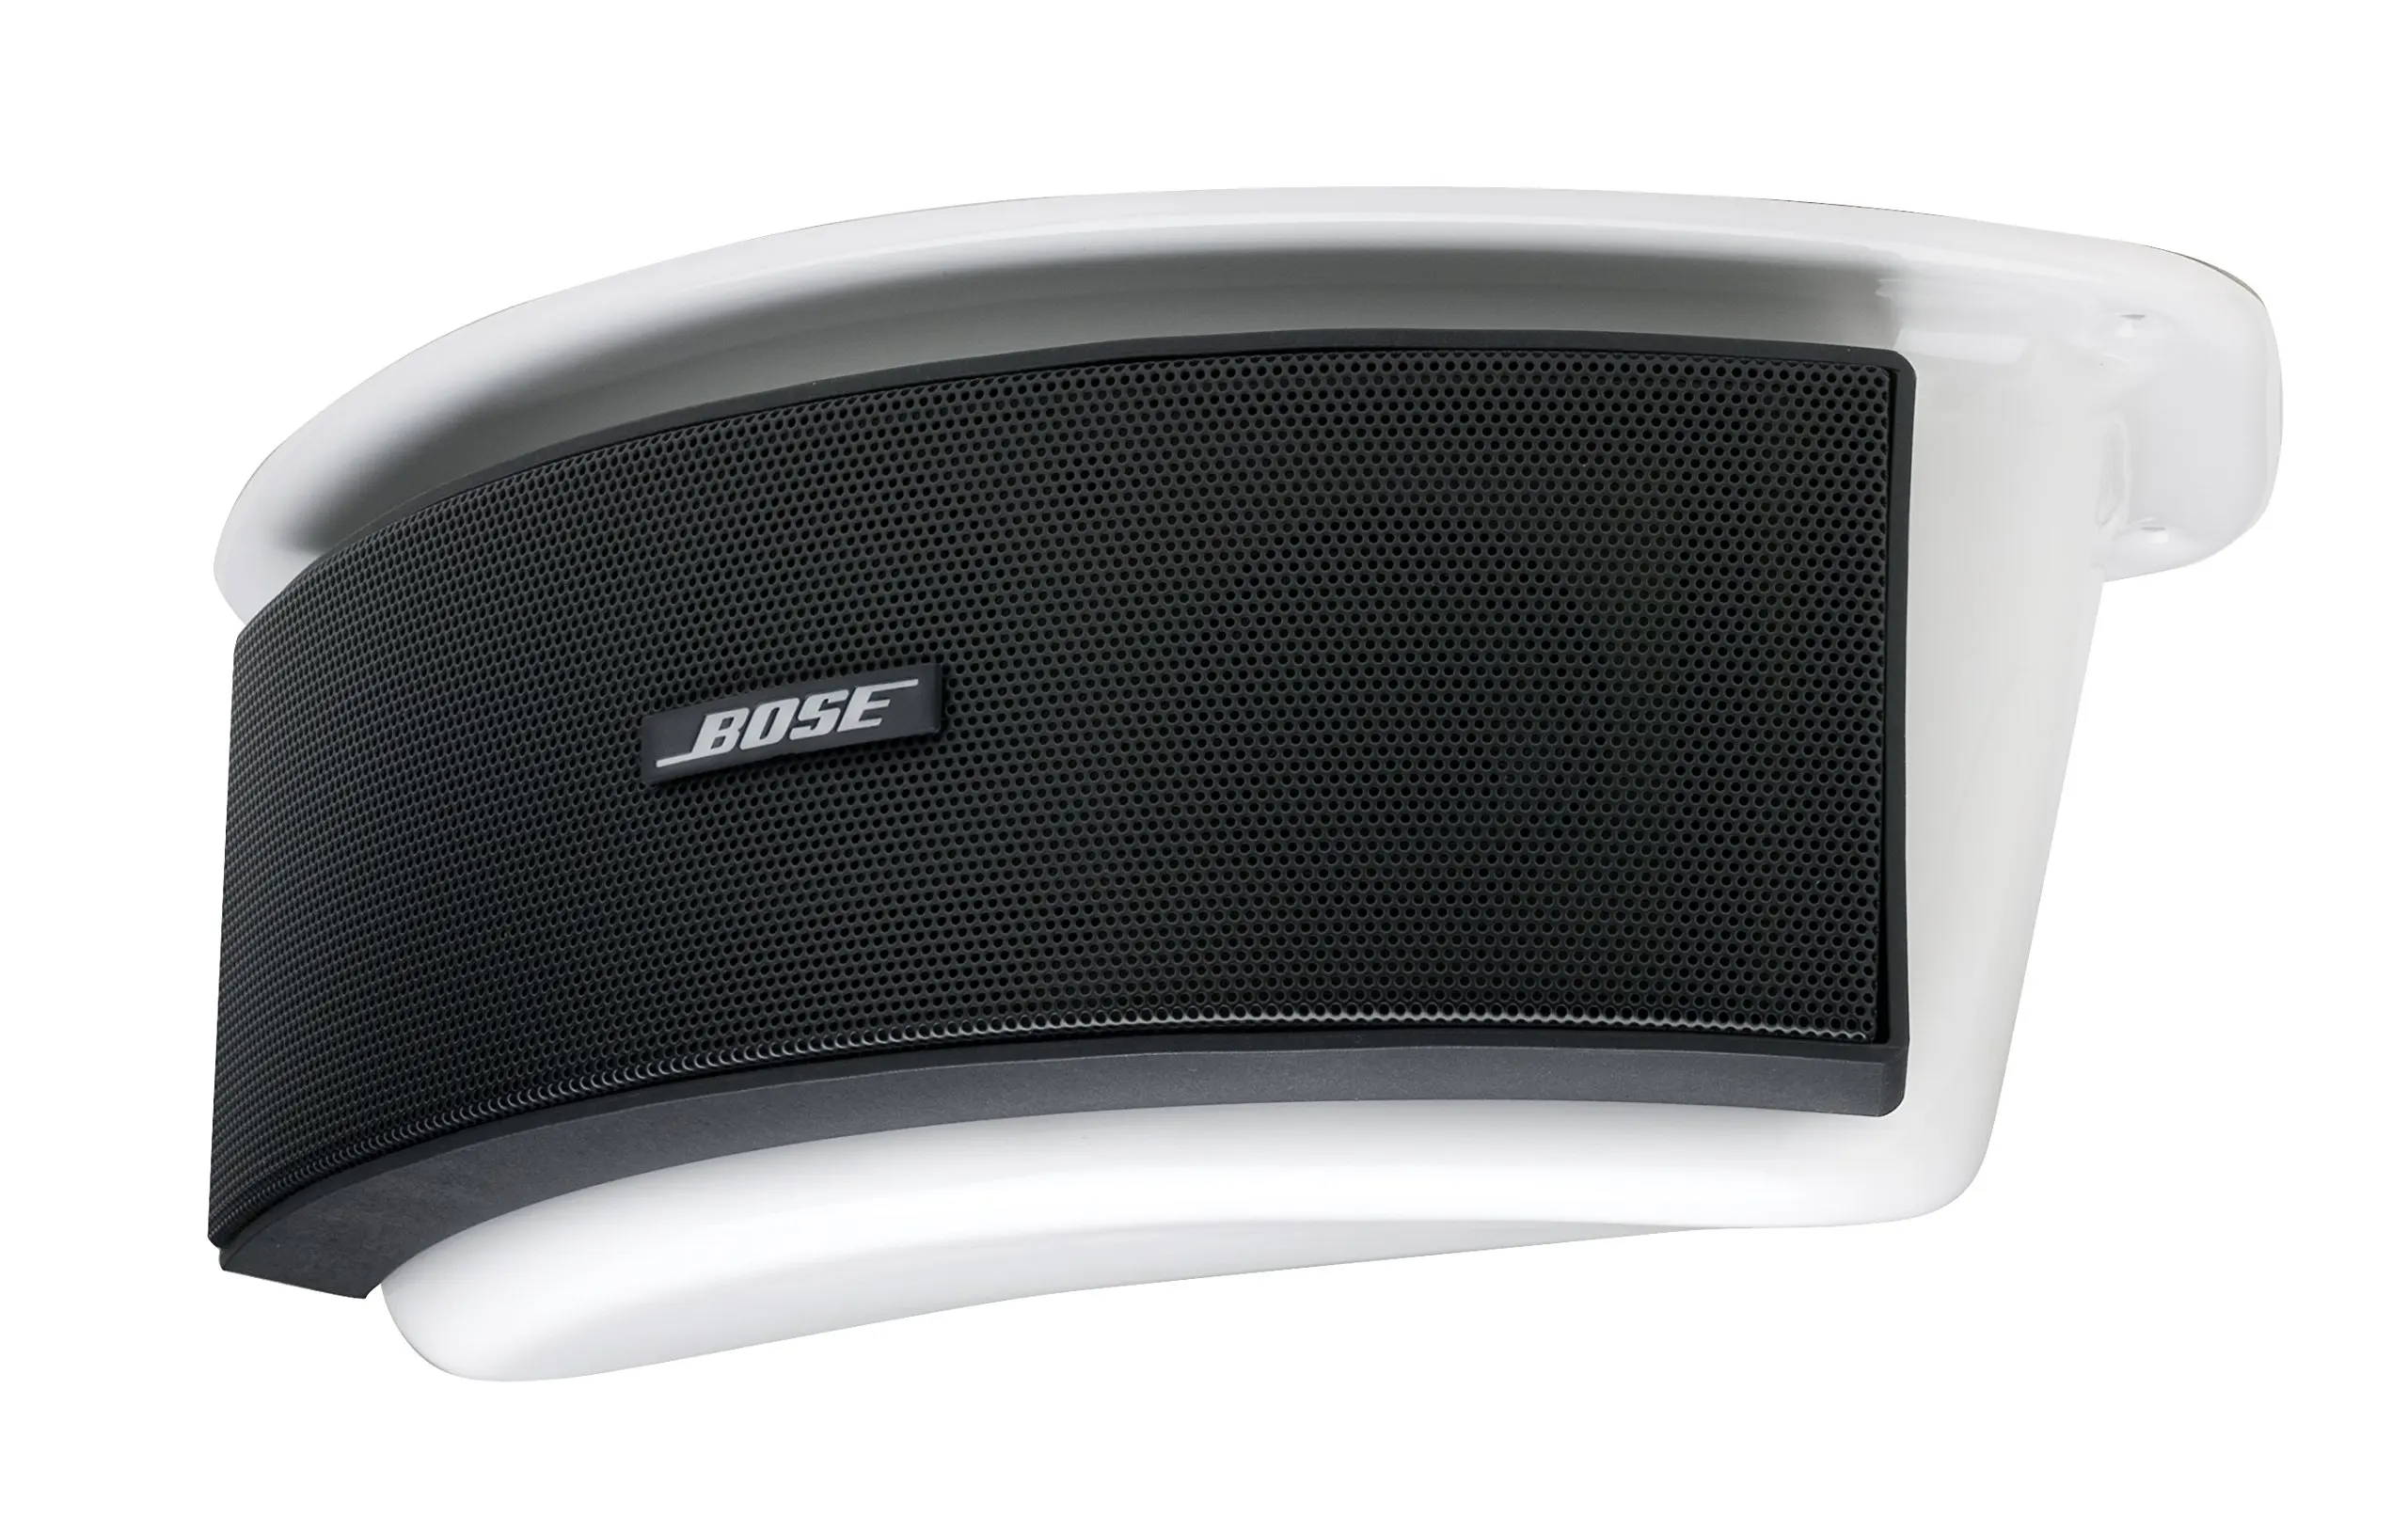 Cheap Bose Motorcycle Speakers, find Bose Motorcycle Speakers deals on